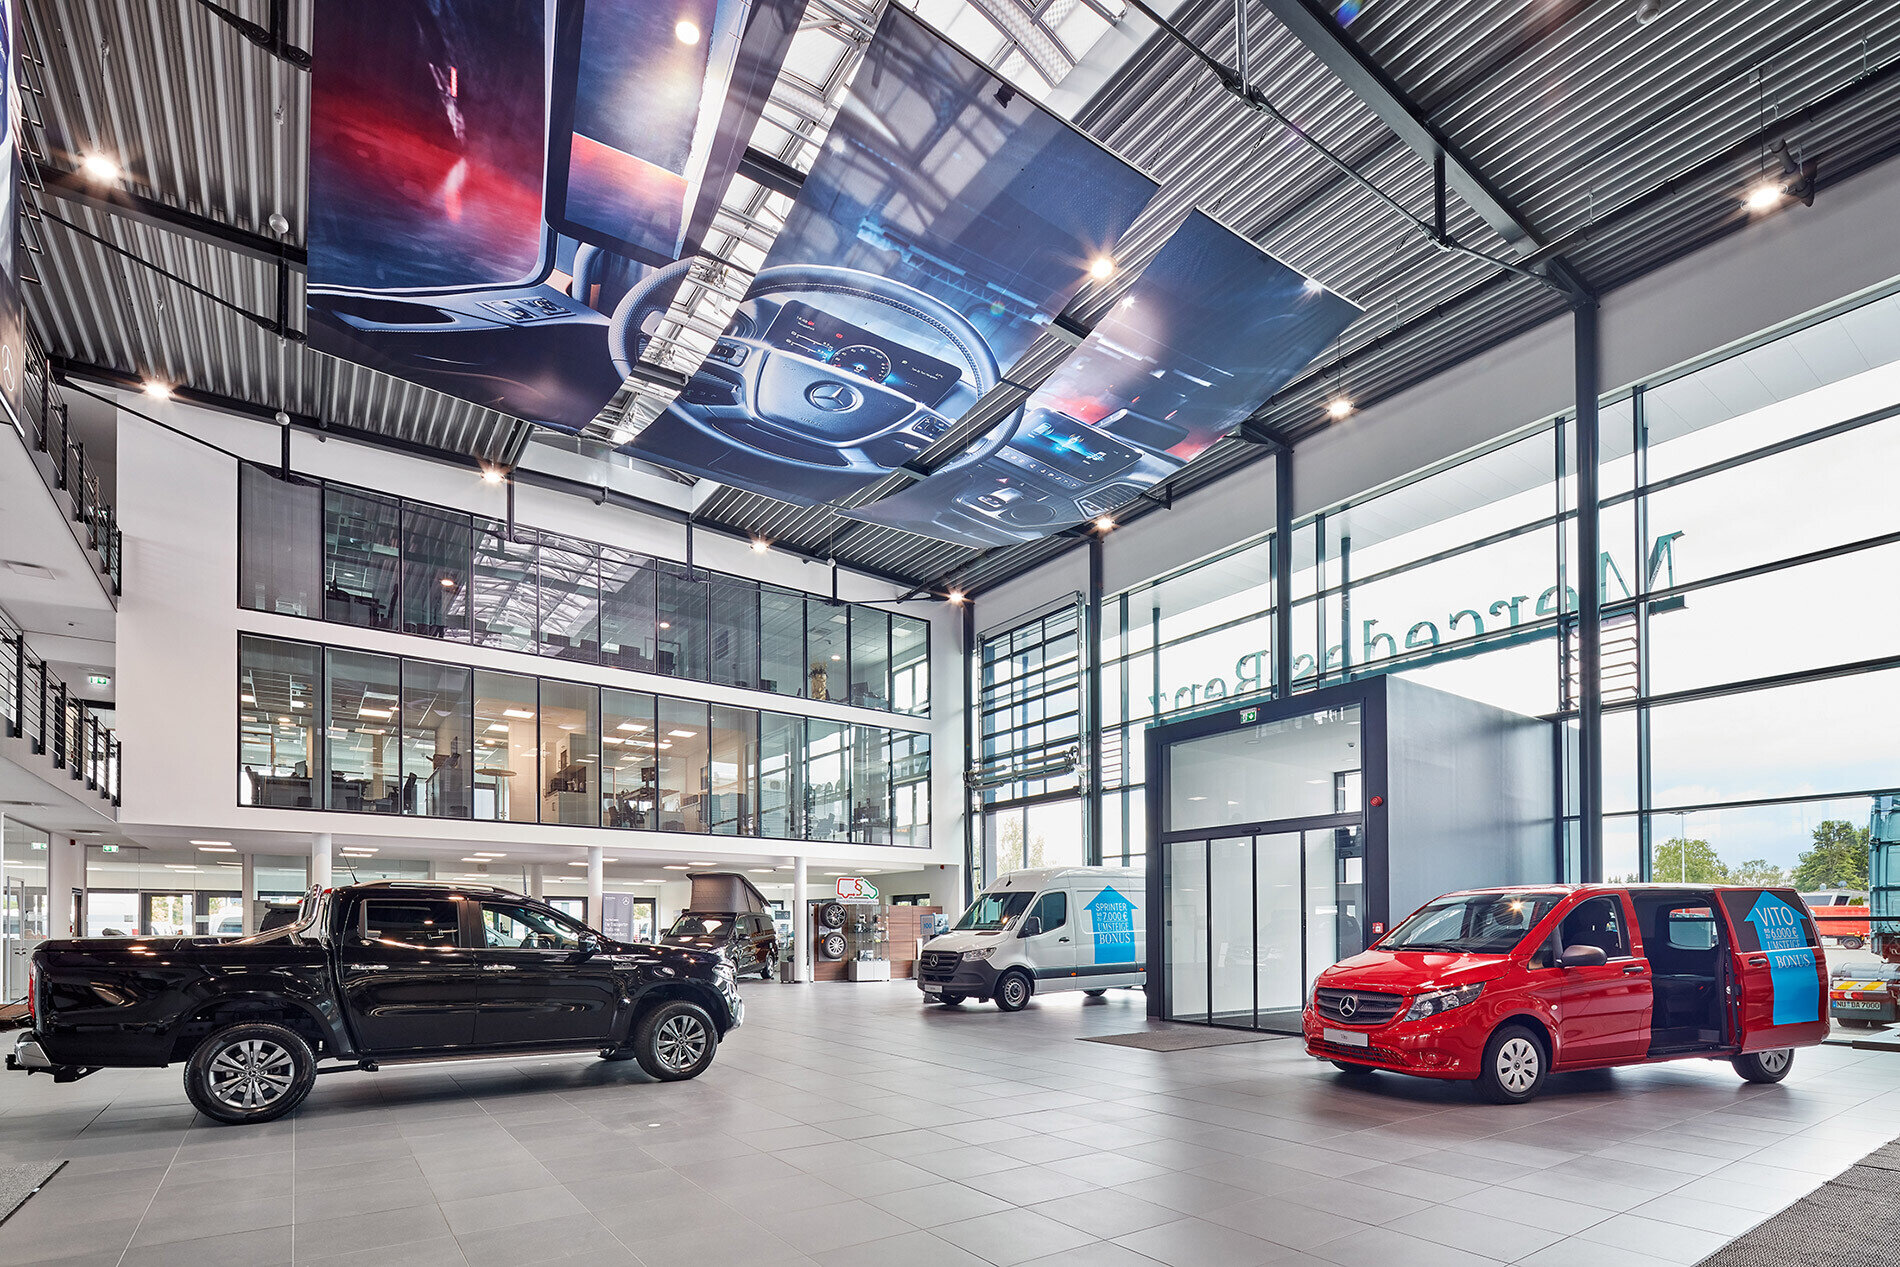 2018, Neubau Mercedes-Benz Nutzfahrzeugzentrum, Neu-Ulm